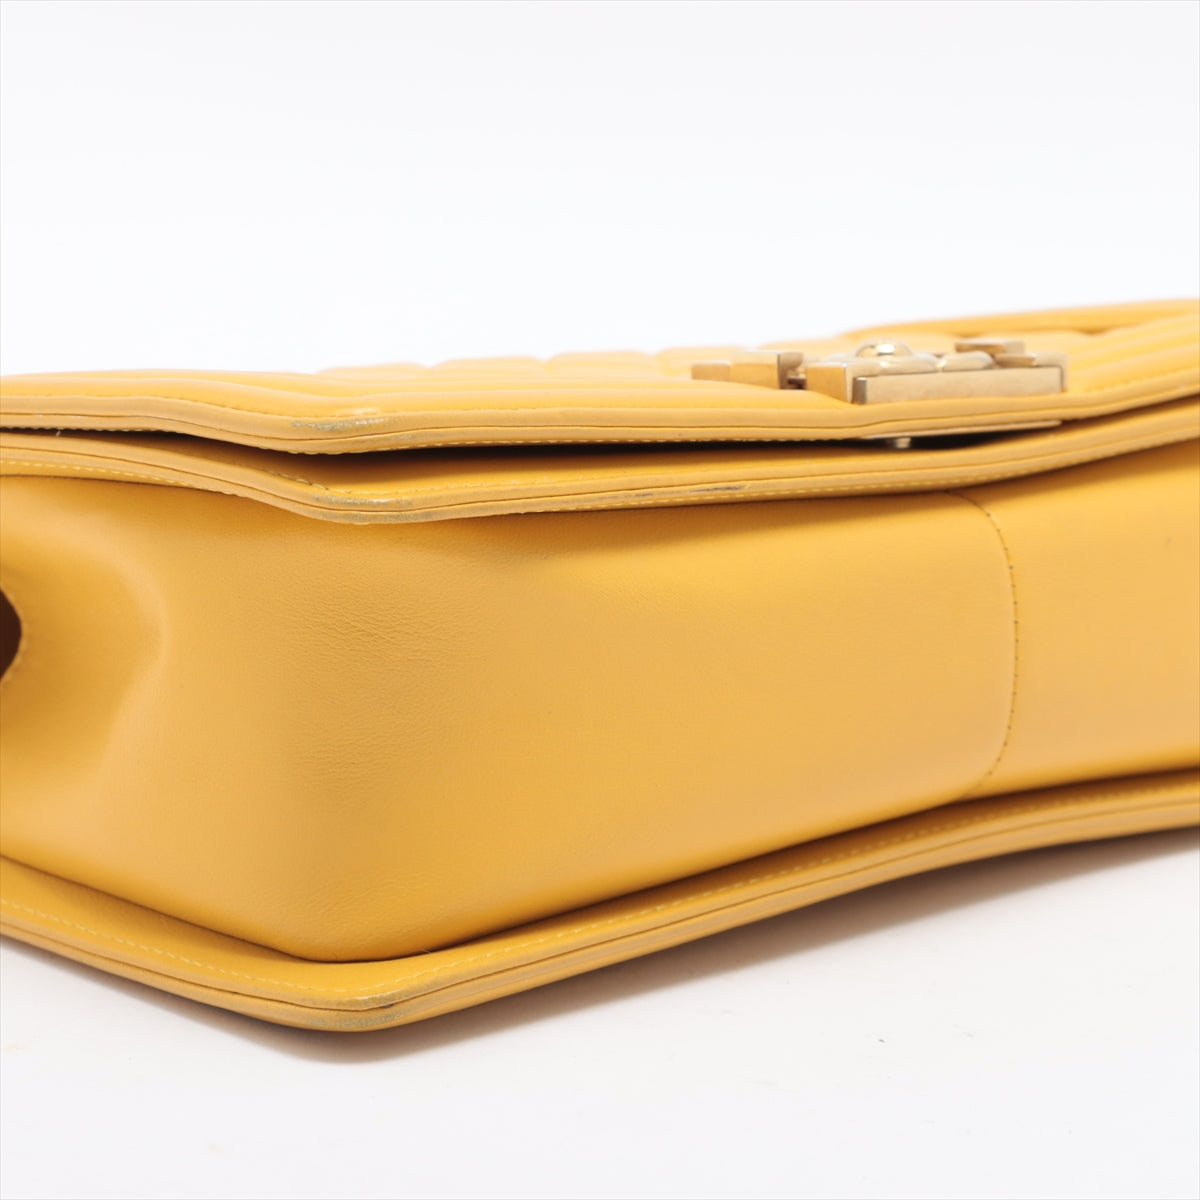 Chanel Boy Chanel Lambskin Chain shoulder bag Yellow gold Gold Metal fittings 21XXXXXX